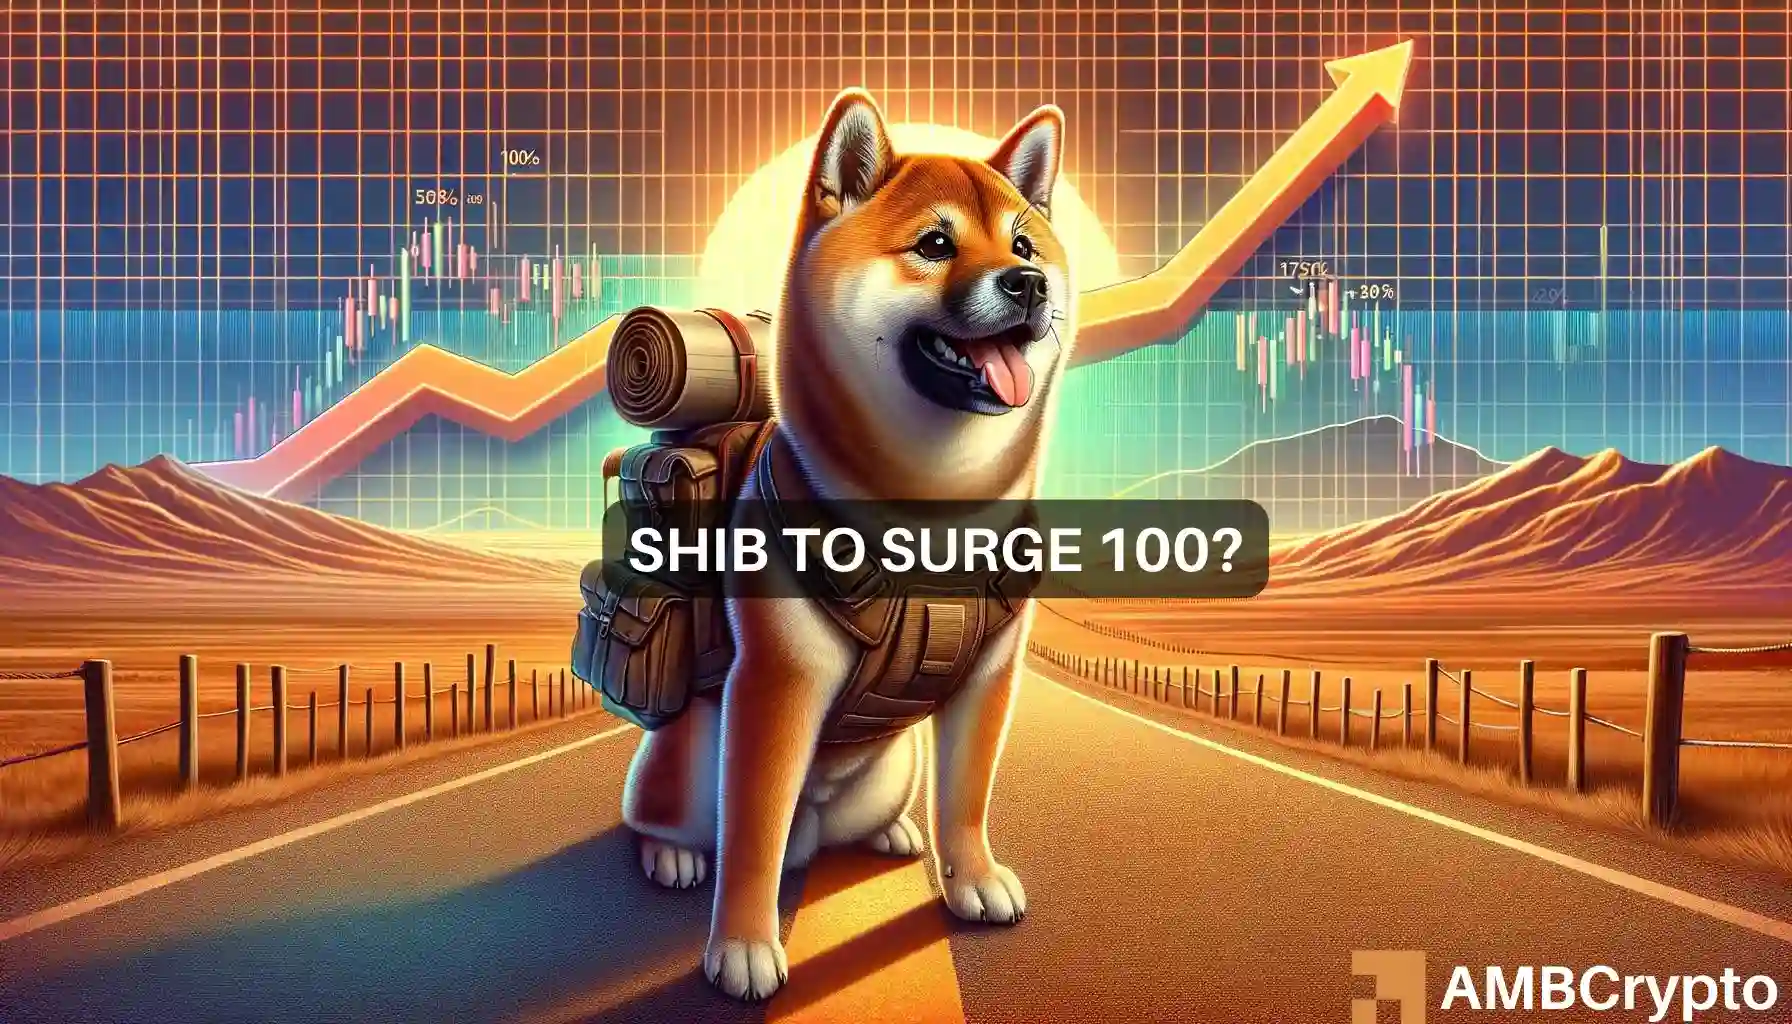 Shiba Inu might surge 100%